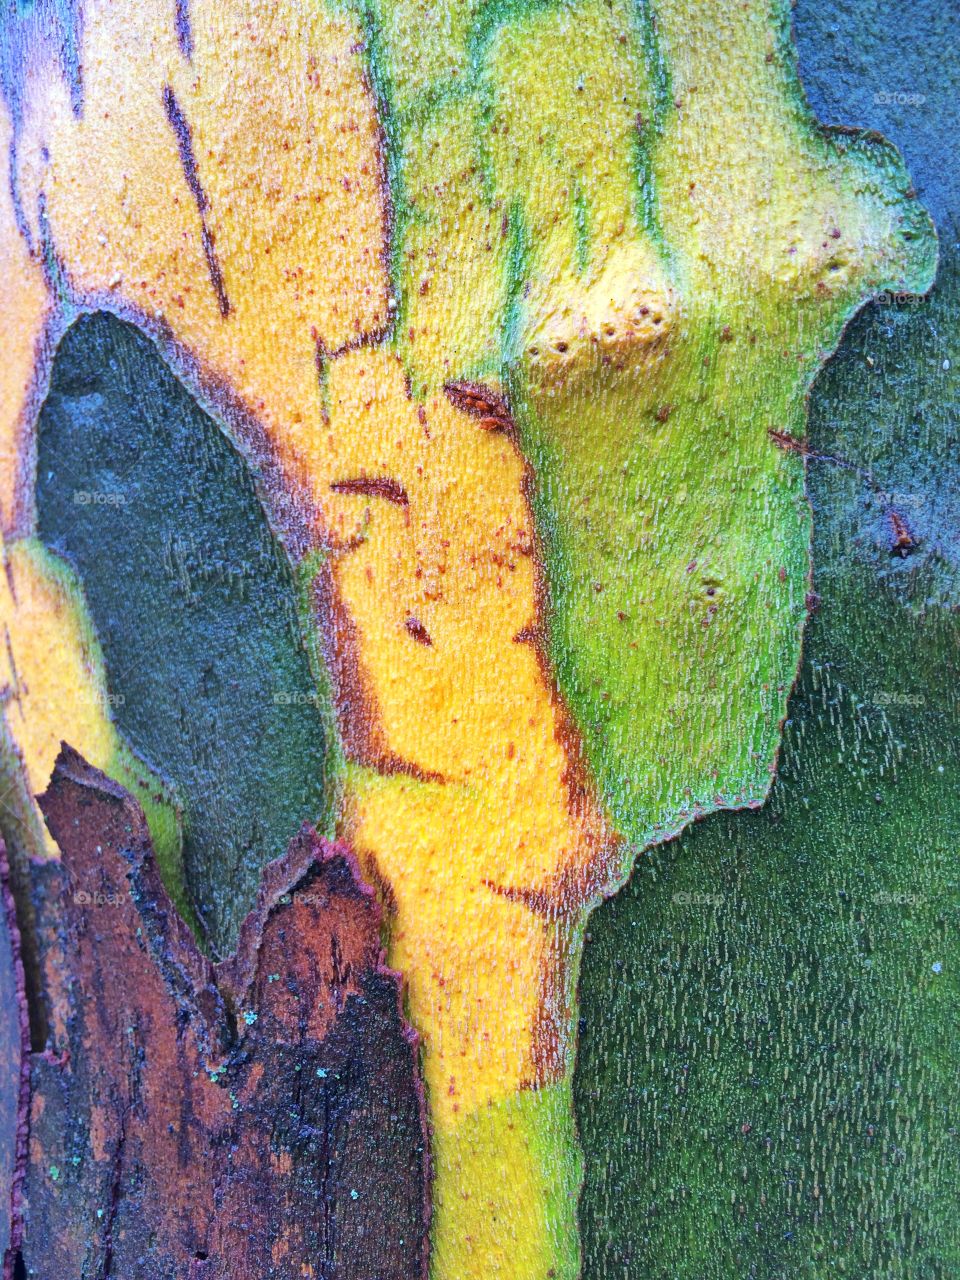 Tree Bark. Colorful tree bark